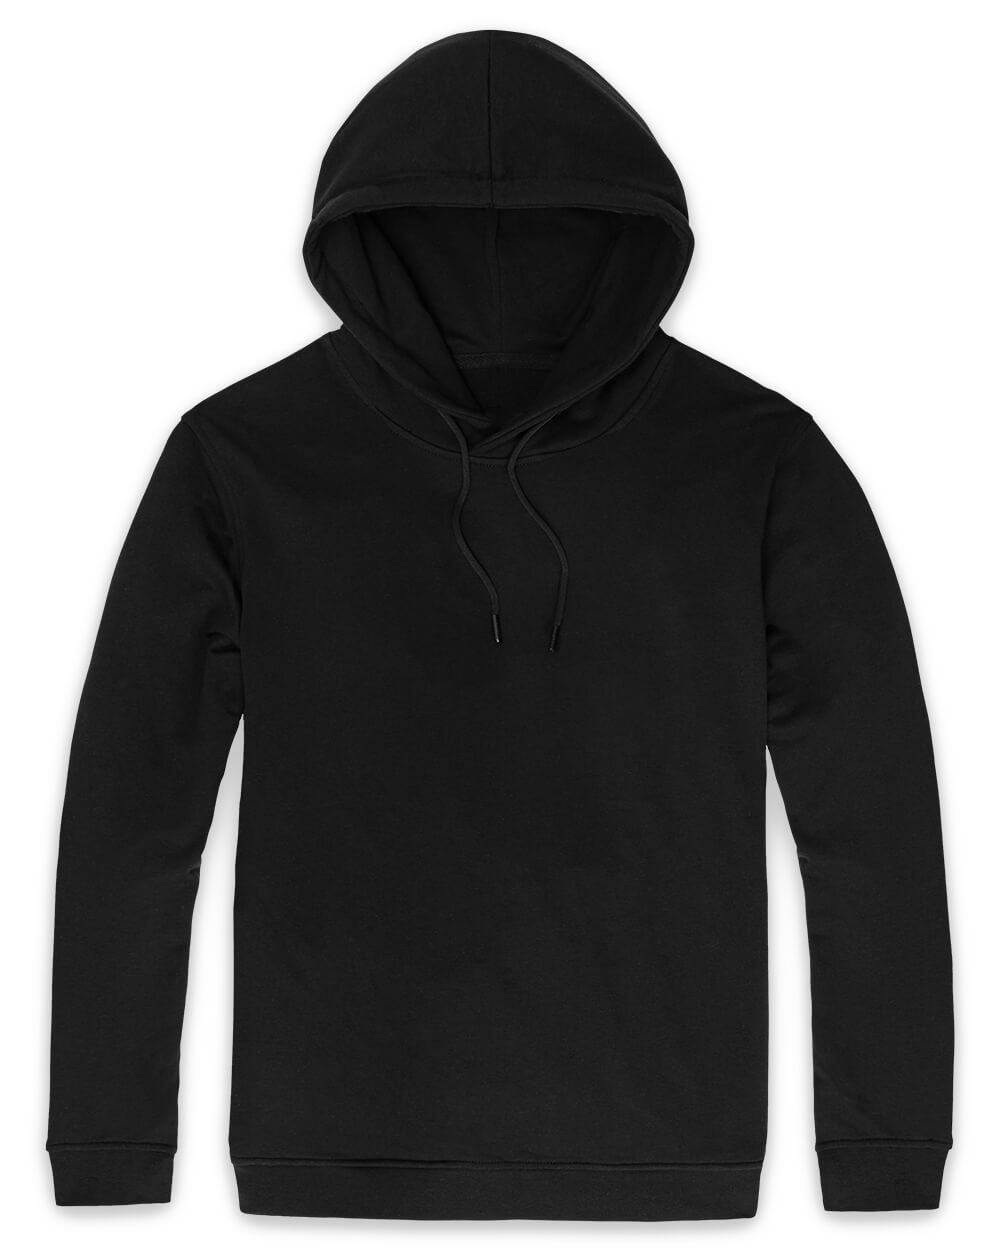 Pullover Hoodie (Hidden Pocket) - Non-Branded-Black-Front